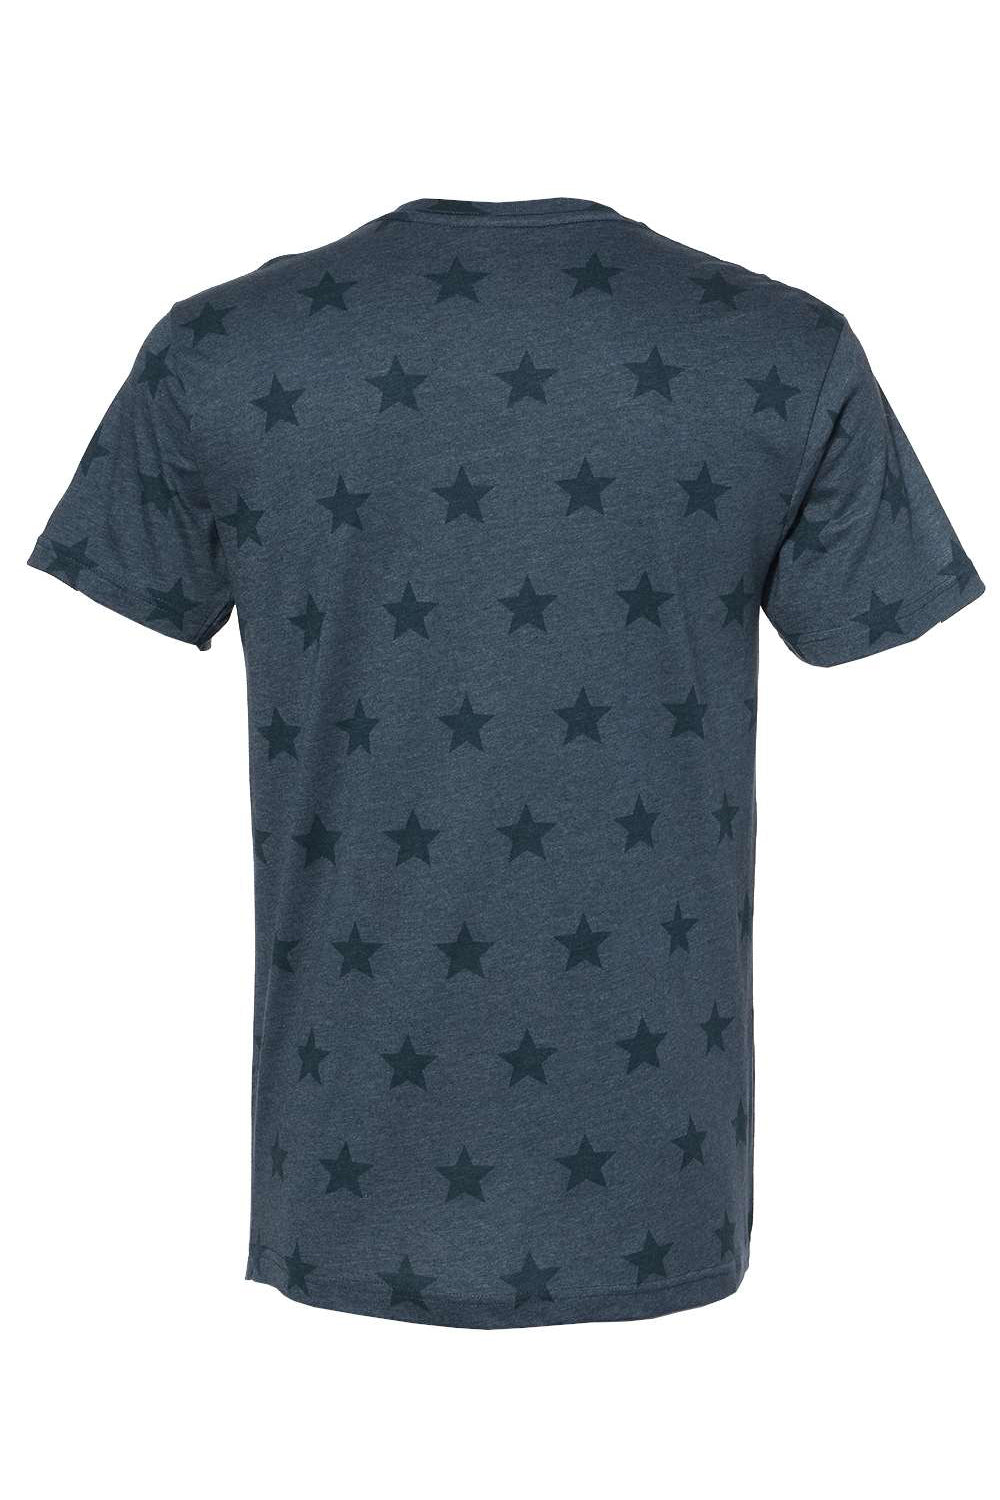 Code Five 3929 Mens Star Print Short Sleeve Crewneck T-Shirt Denim Blue Flat Back